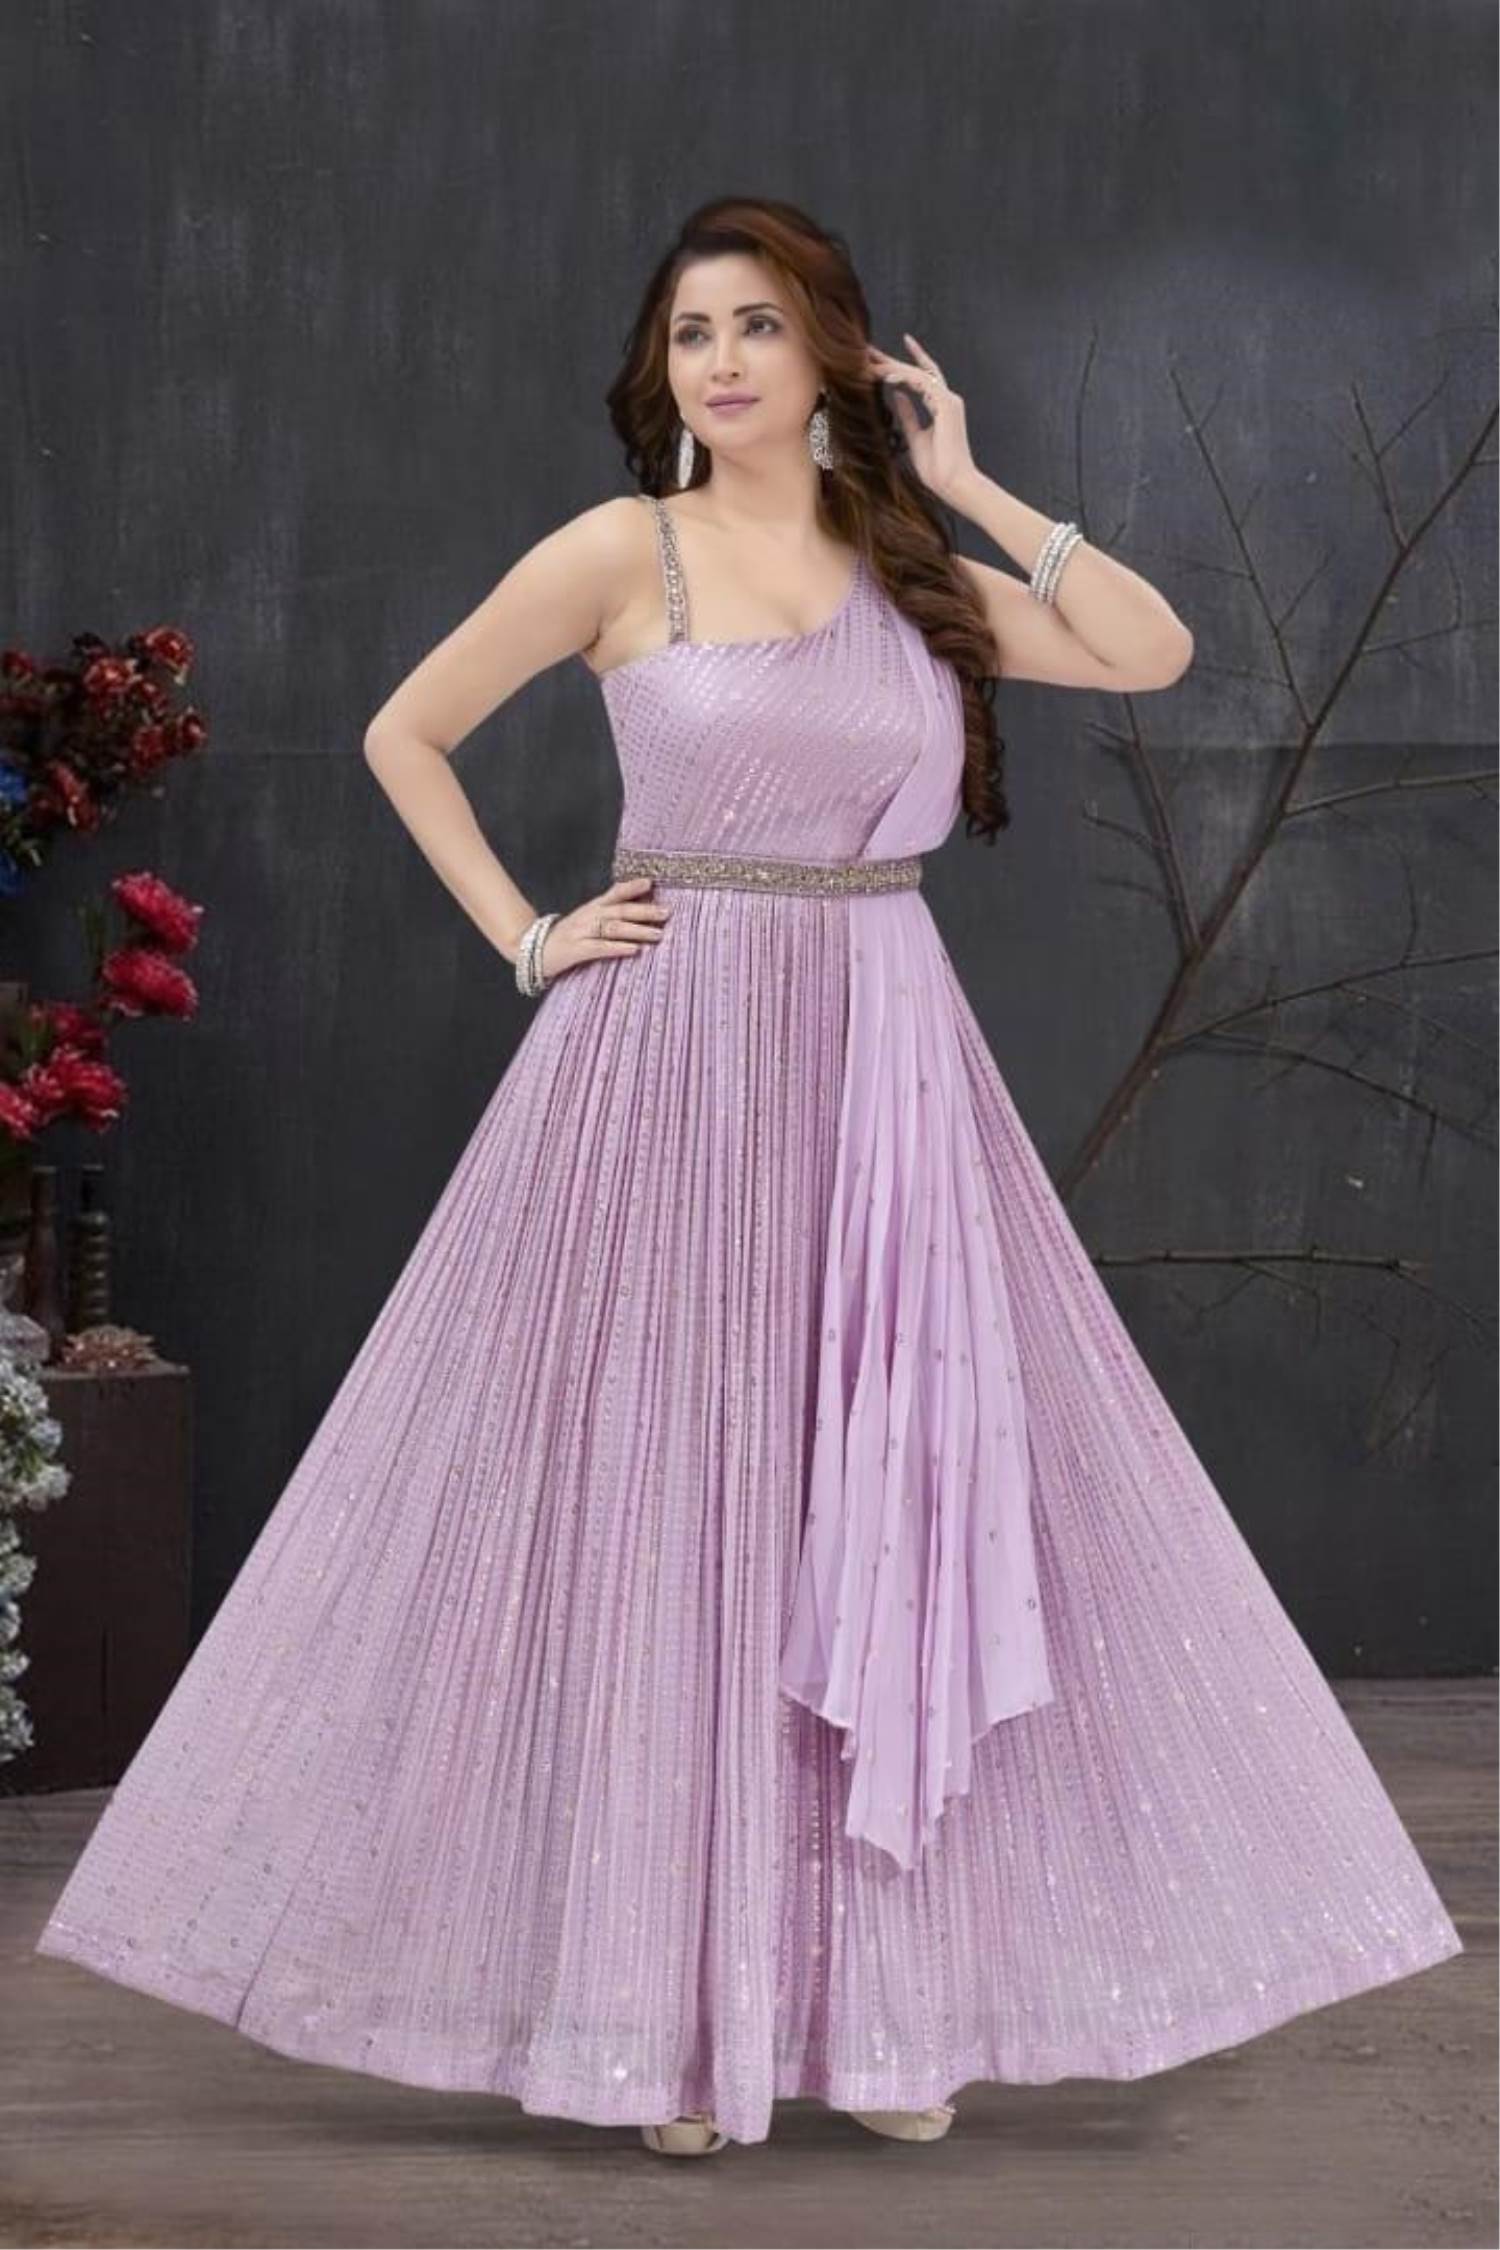 Lace breast French Light Wedding Dress Light Luxury Senior Sense Of Tailing  | eBay